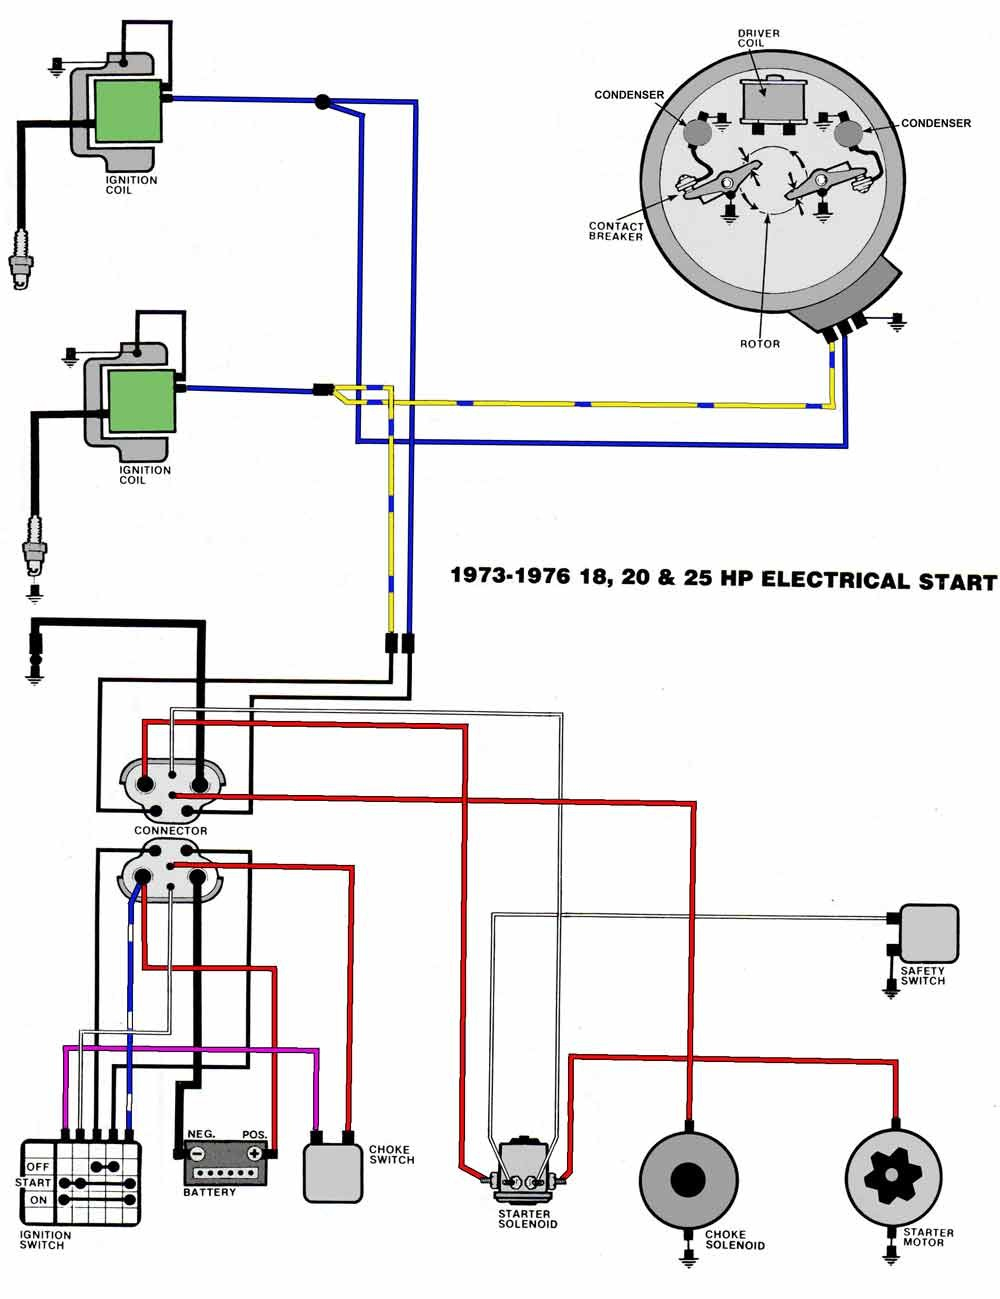 Trombetta Solenoid Wiring Diagram - Electrical Schematic Wiring - Trombetta Solenoid Wiring Diagram